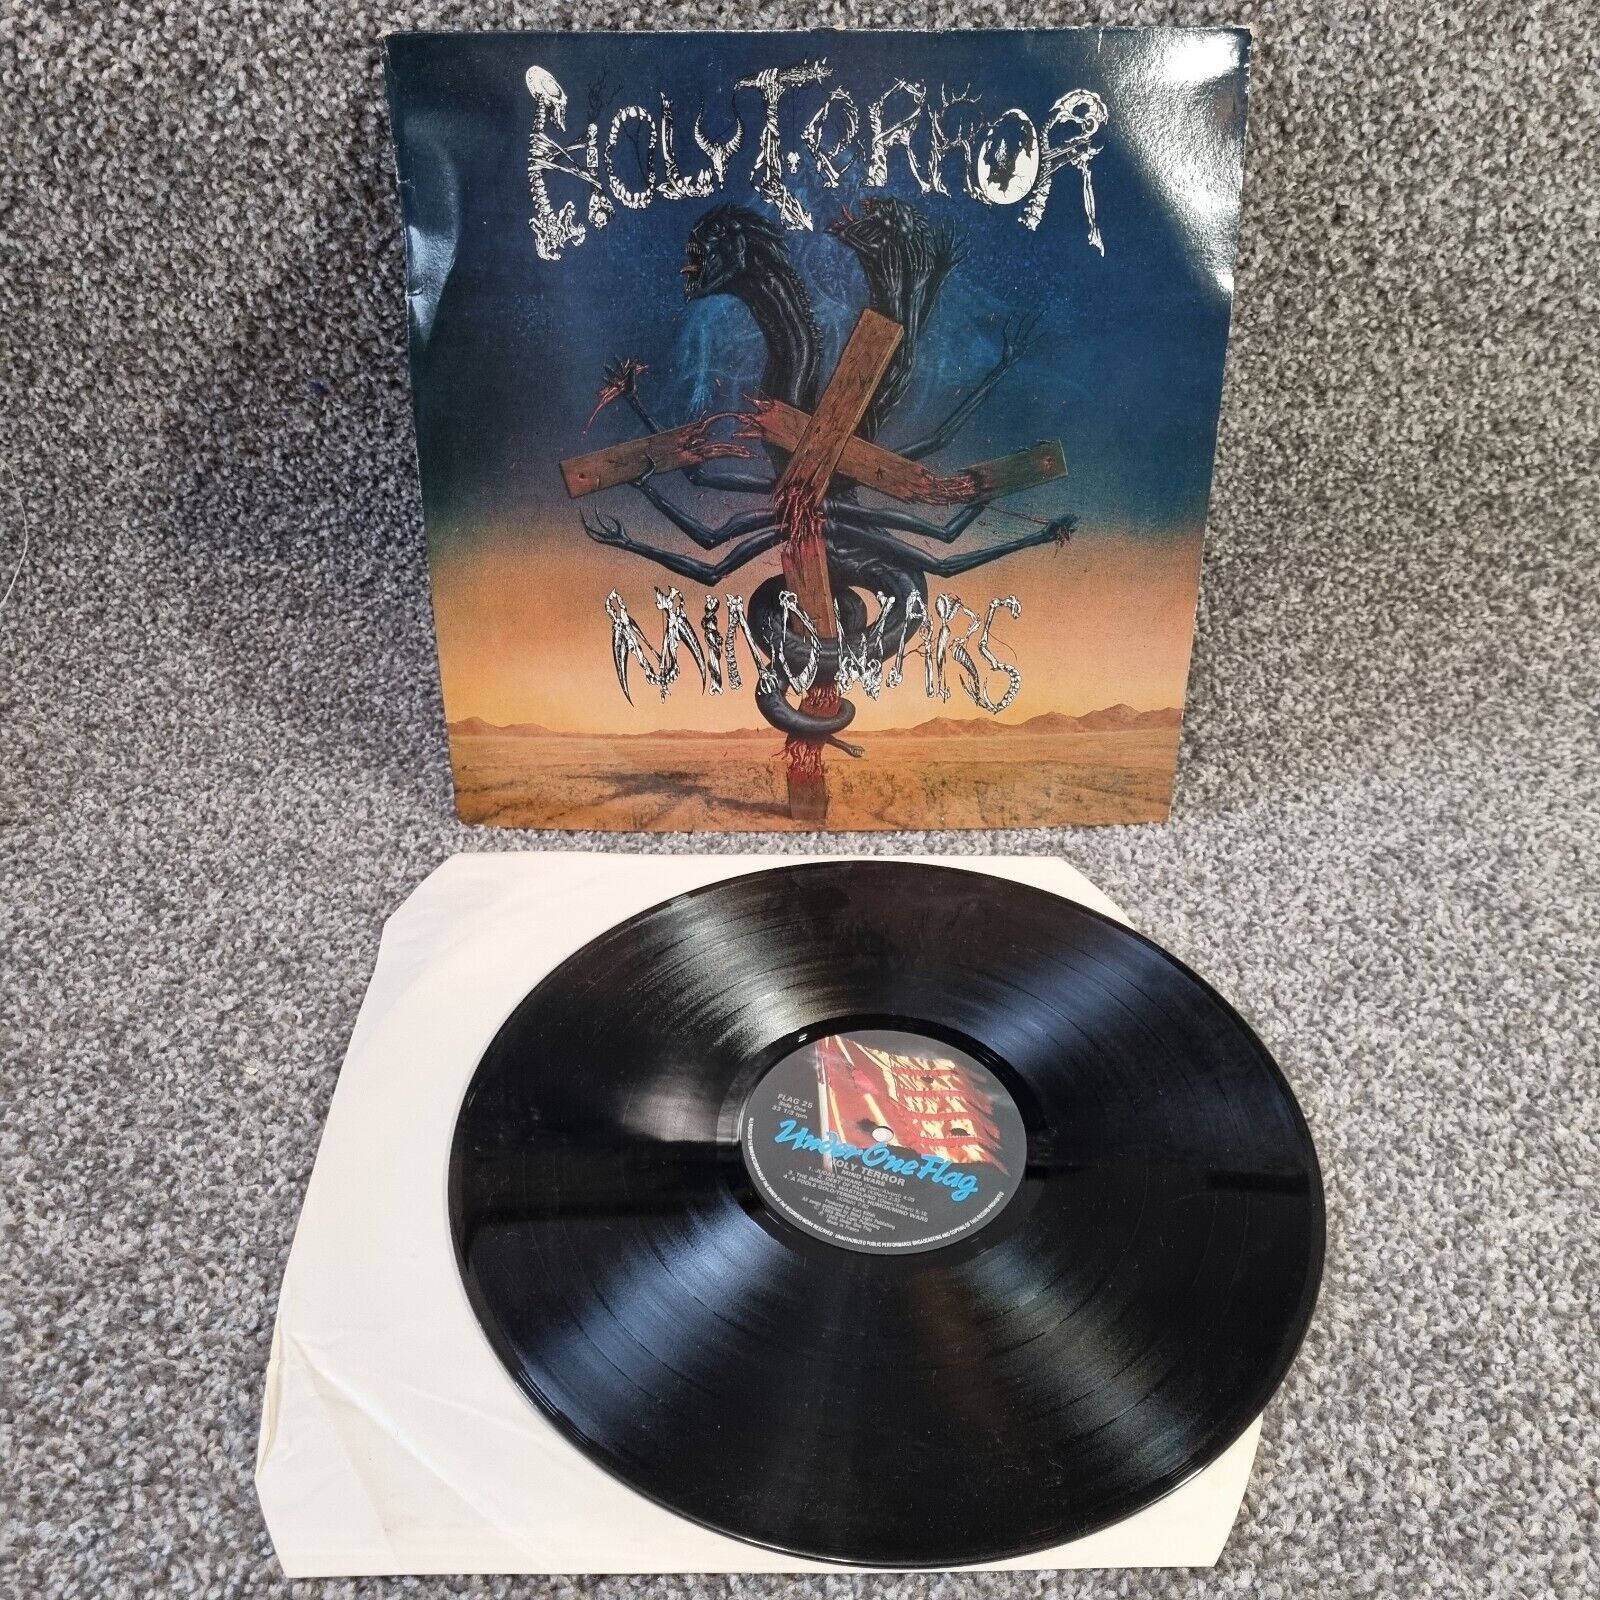 Holy Terror Mind Wars vinyl LP album record UK Flag 25 1988